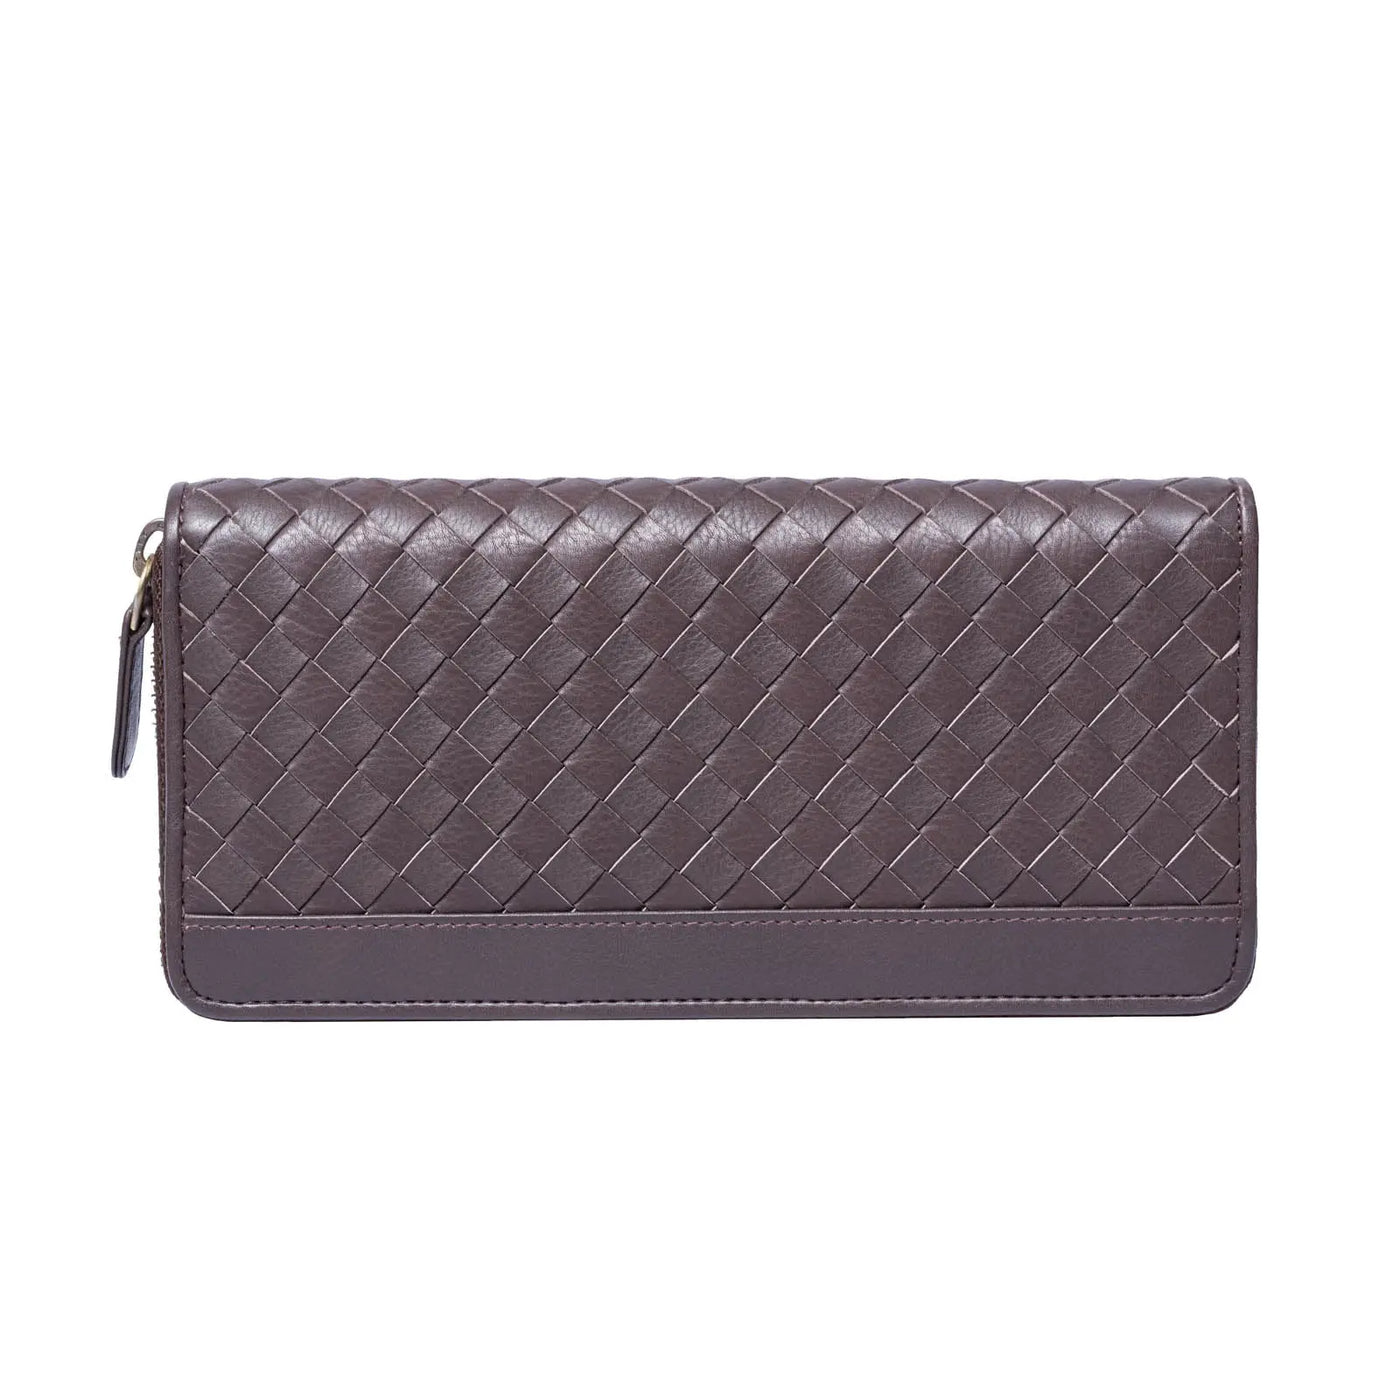 Caroline supple leather wallet